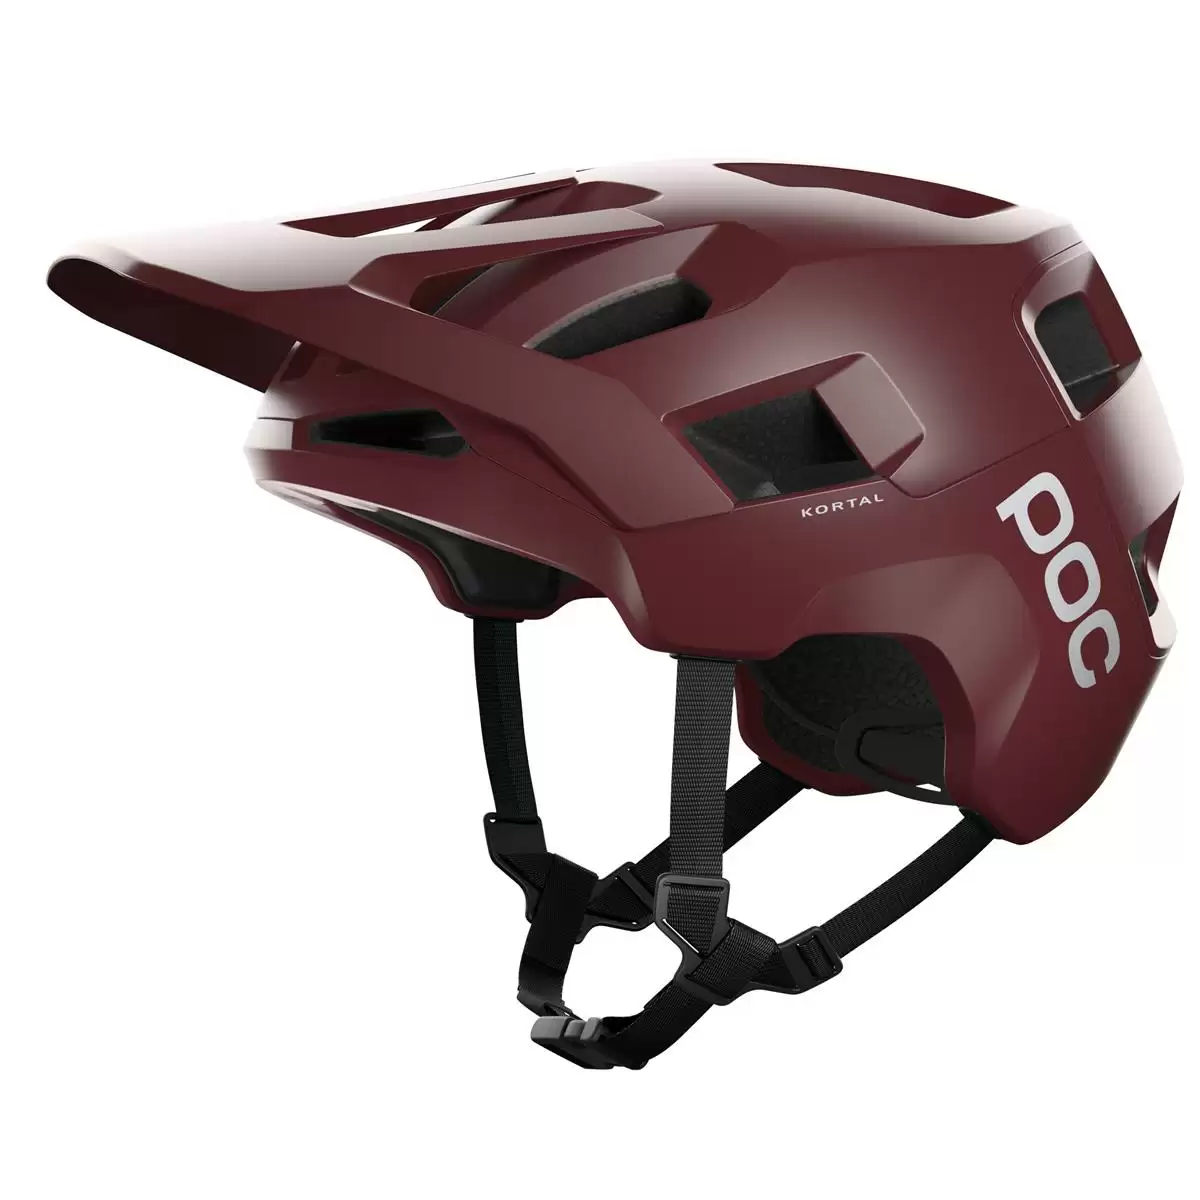 Helmet Kortal Propylene Red Matt size XS-S (51-54cm) - image